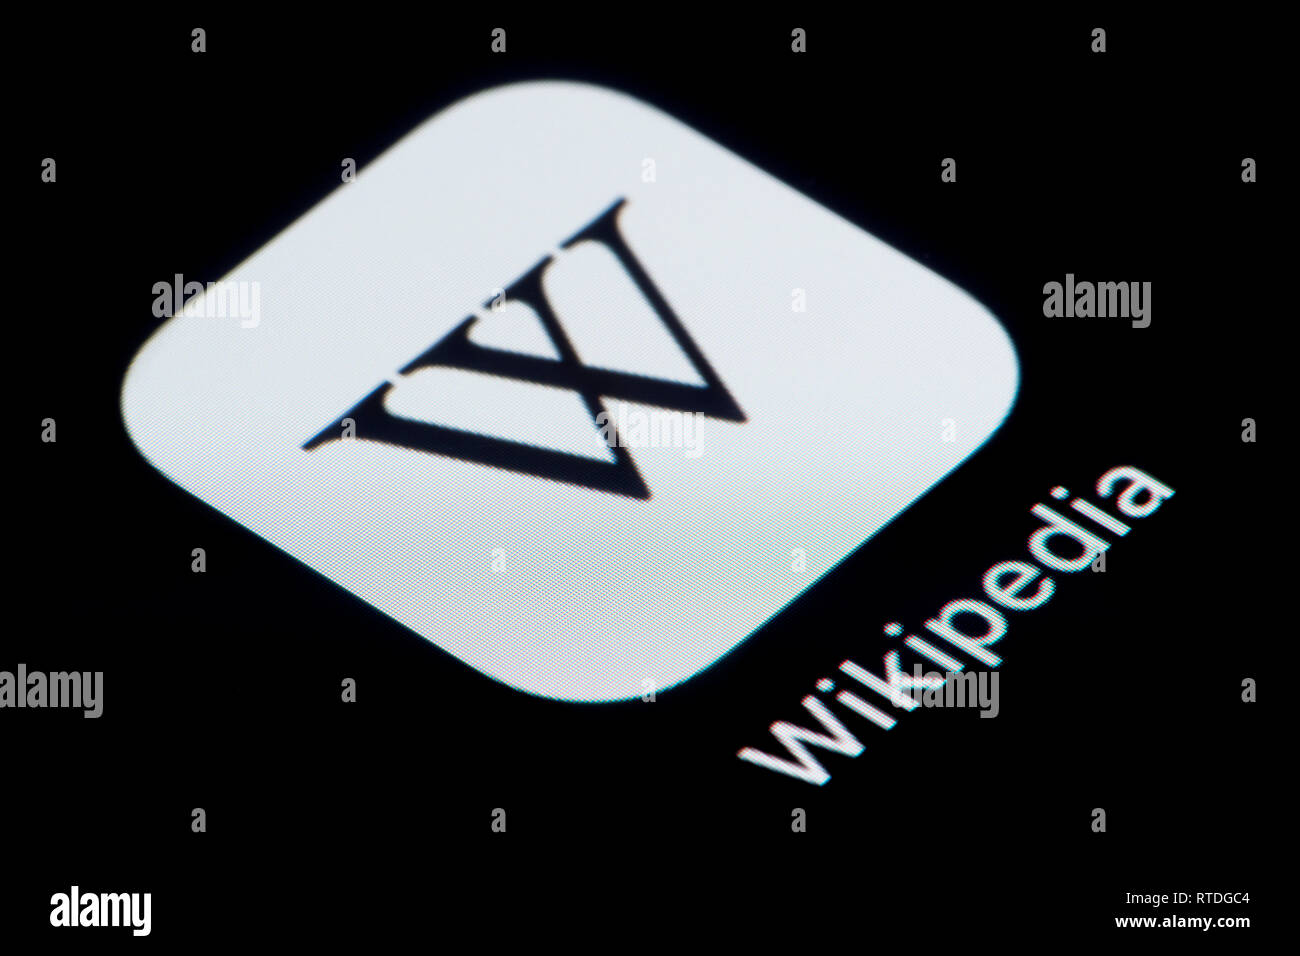 OnePlus 6 - Wikipedia